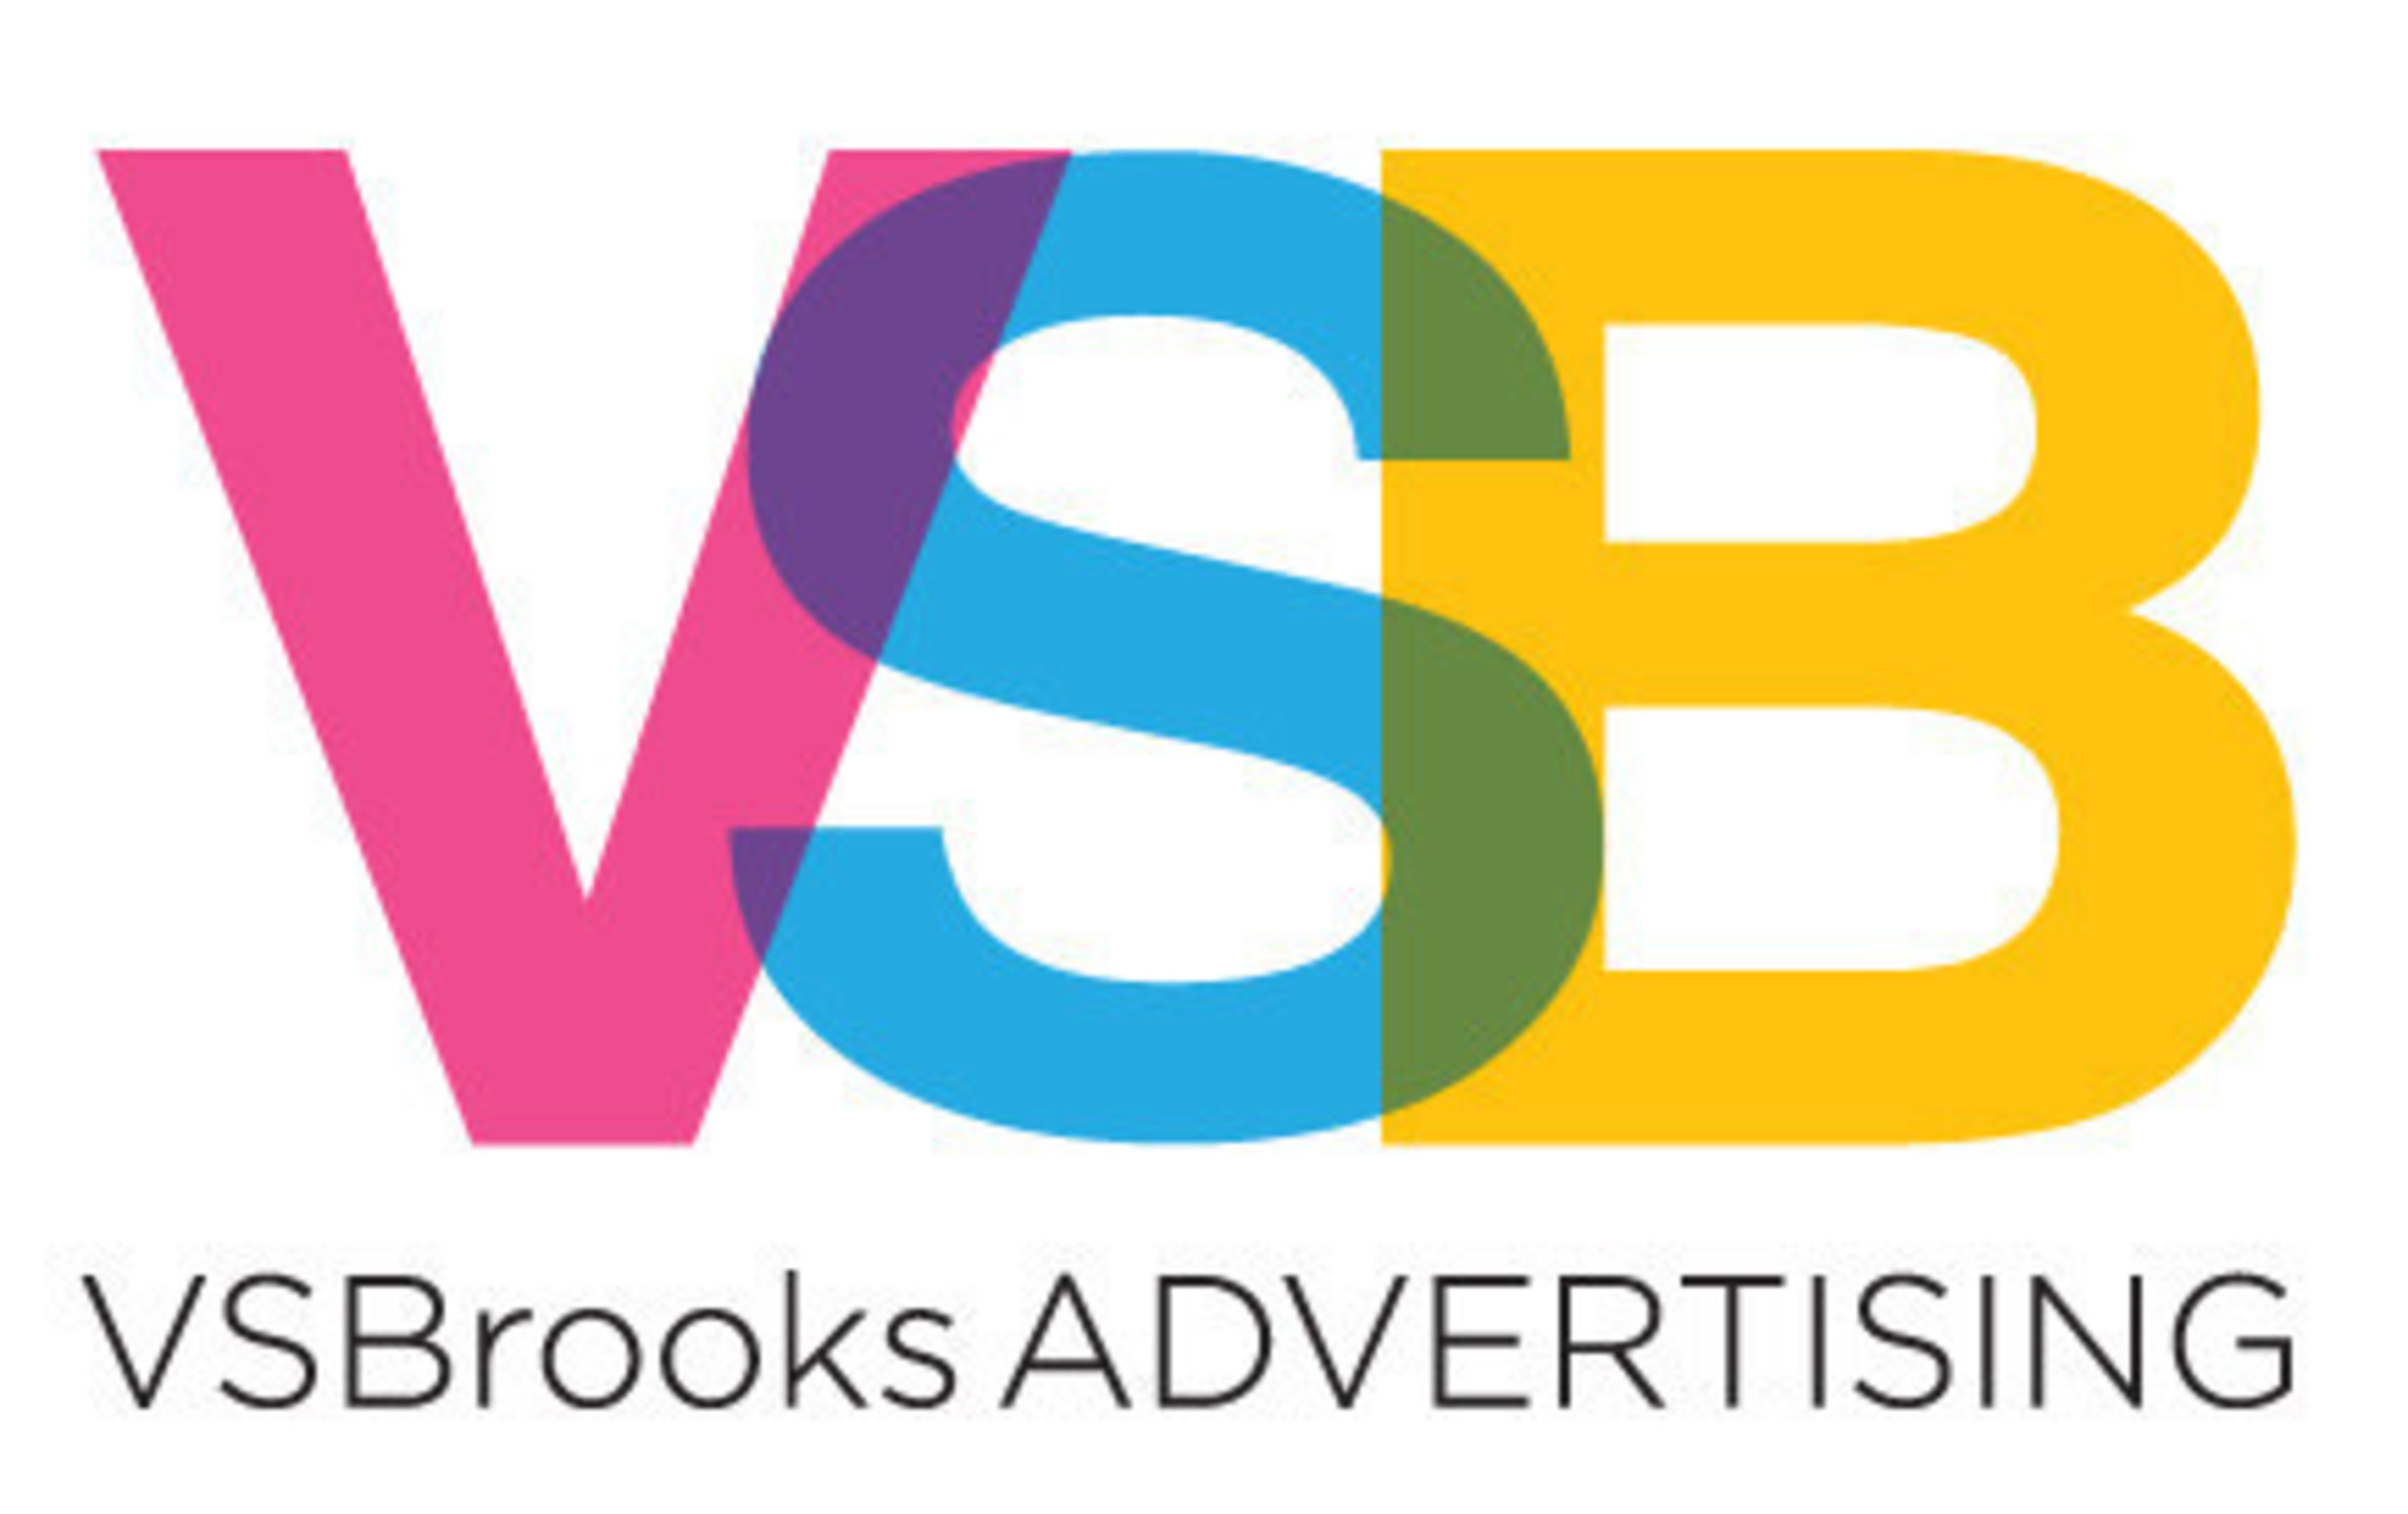 VSBrooks ADVERTISING (PRNewsFoto/VSBrooks ADVERTISING)